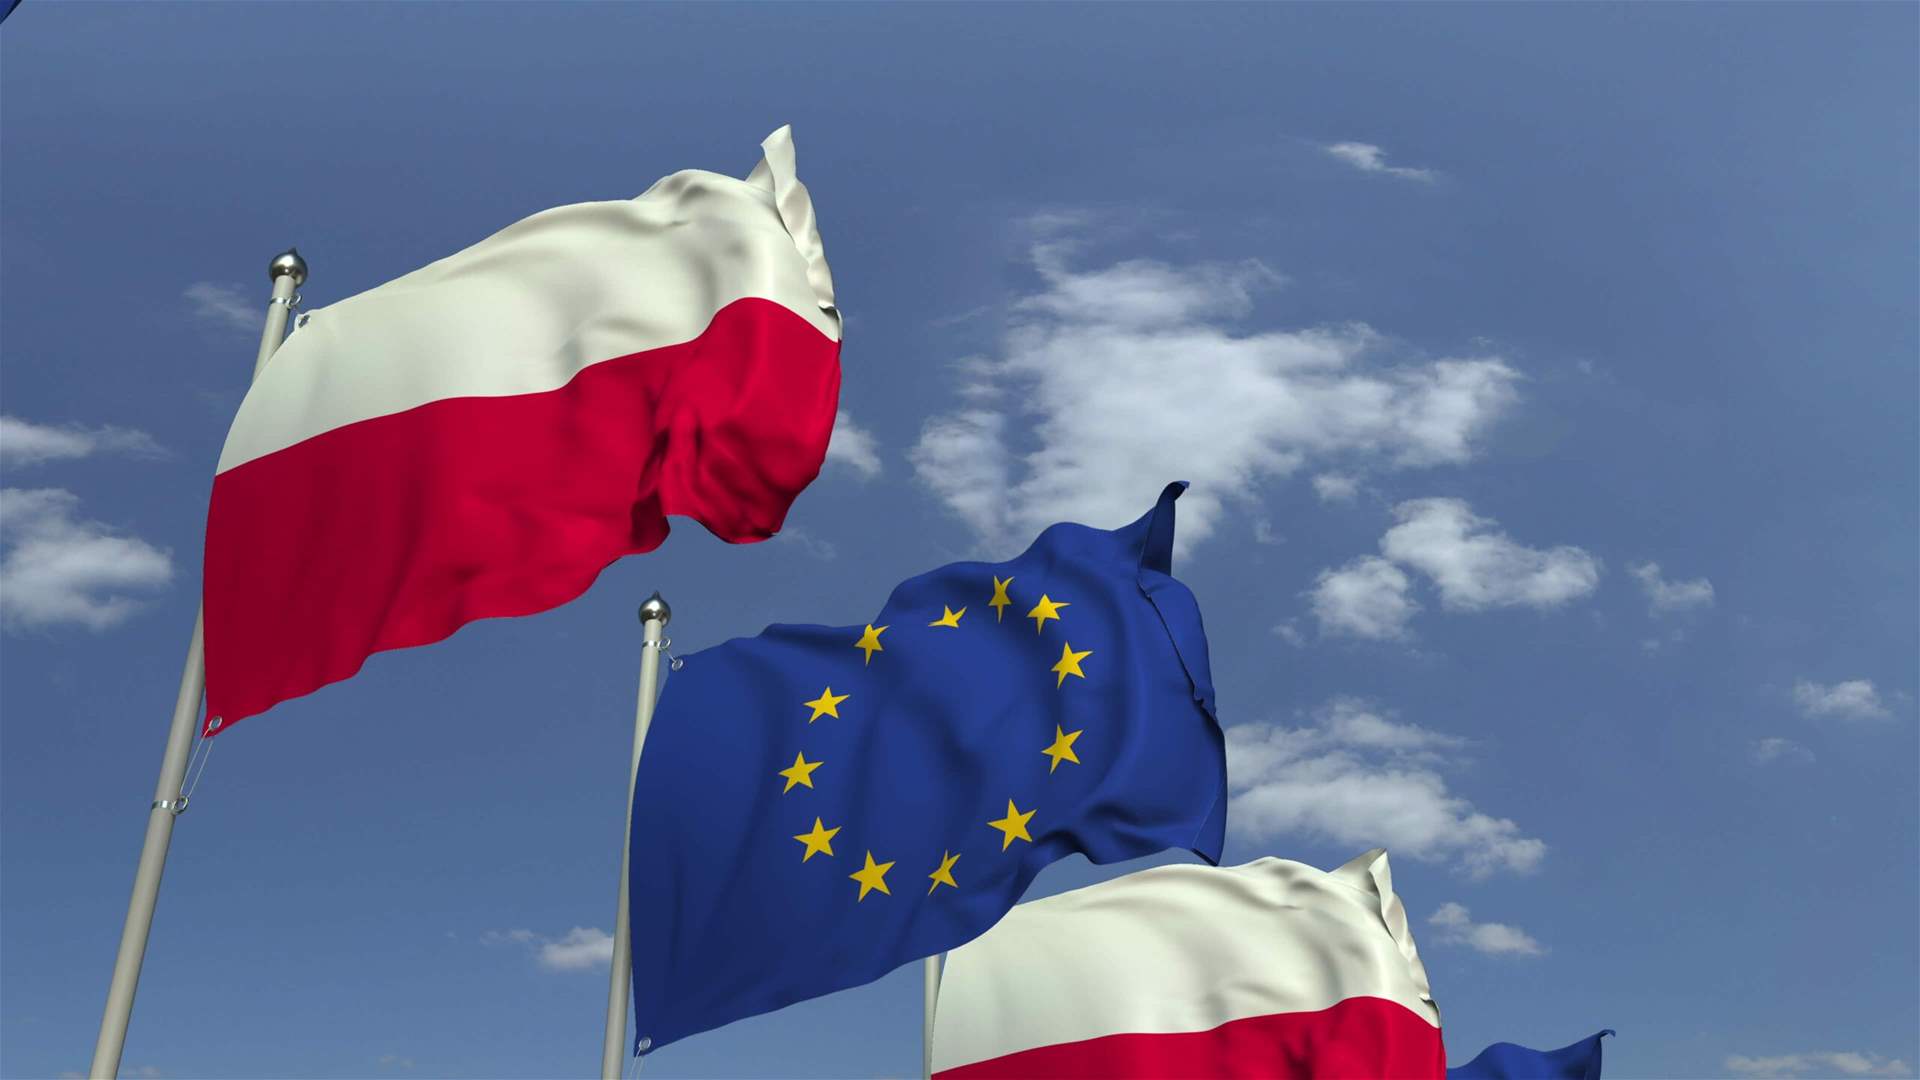 Poland receives $6.7 bln in EU funds